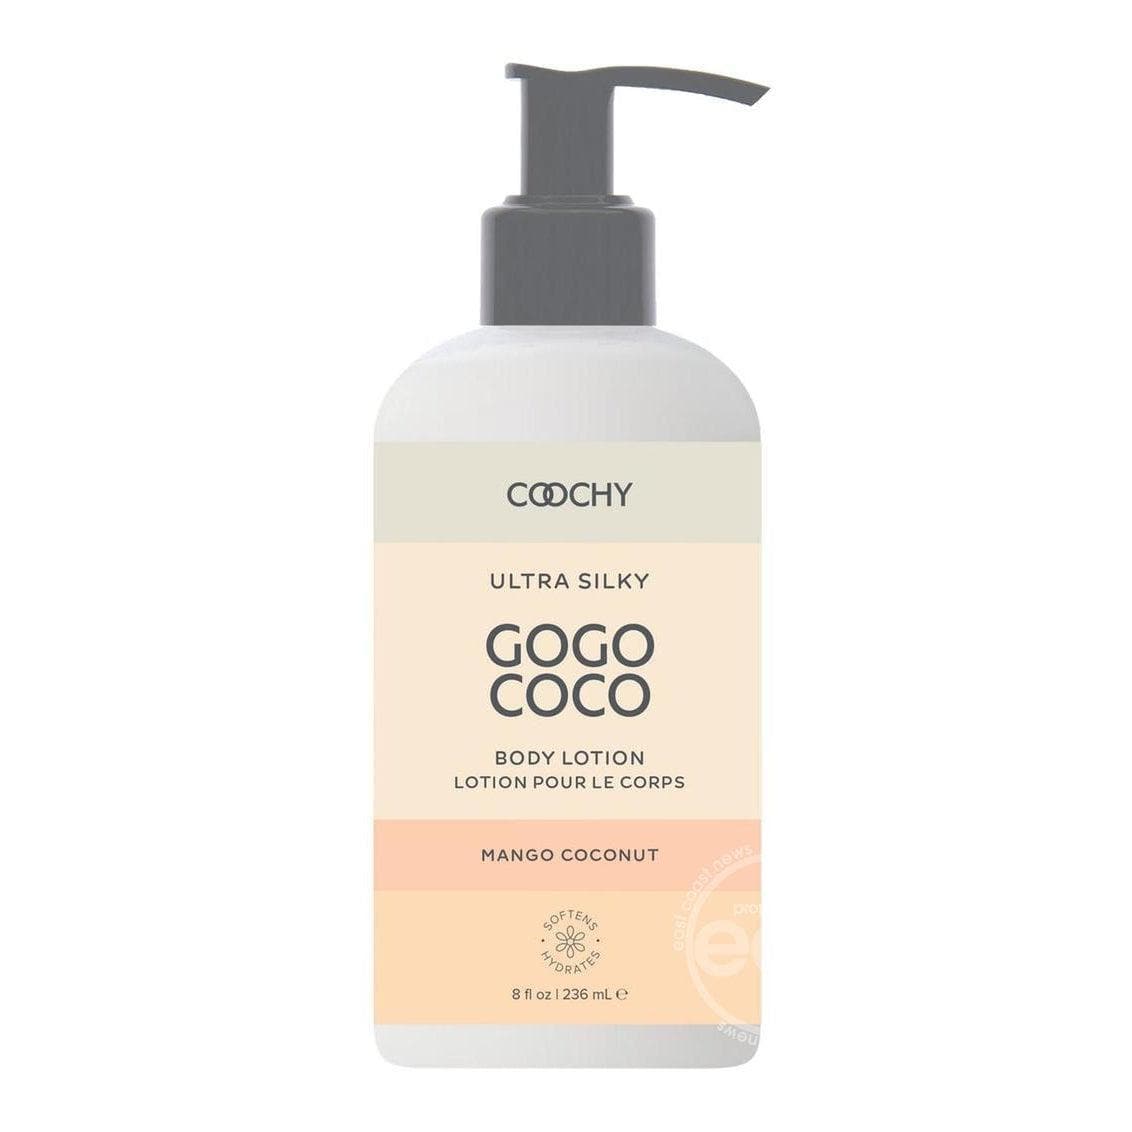 Coochy Ultra Silky Gogo Coco Body Lotion Mango Coconut 8 oz - Romantic Blessings